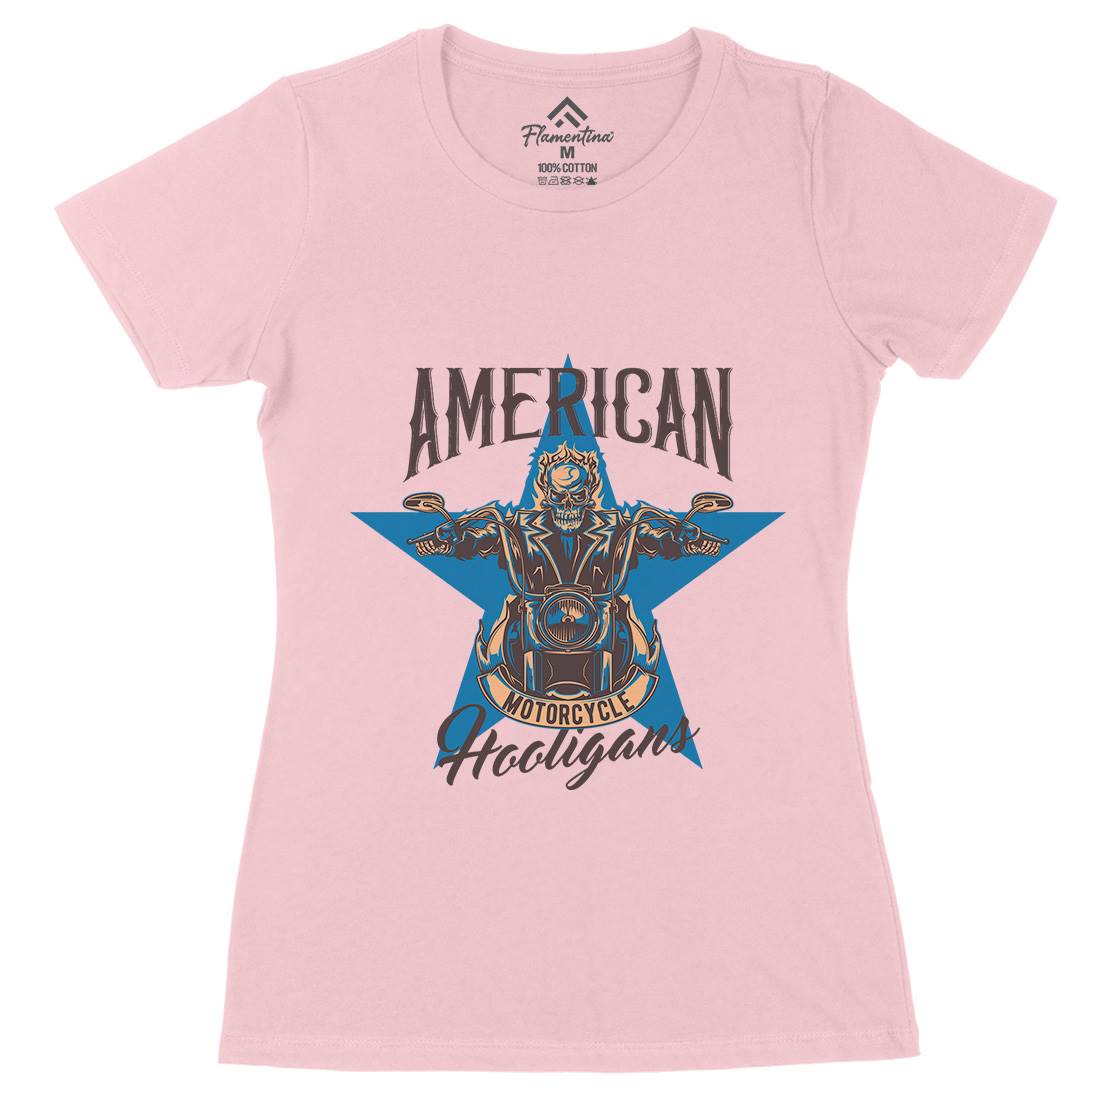 American Womens Organic Crew Neck T-Shirt Motorcycles B144